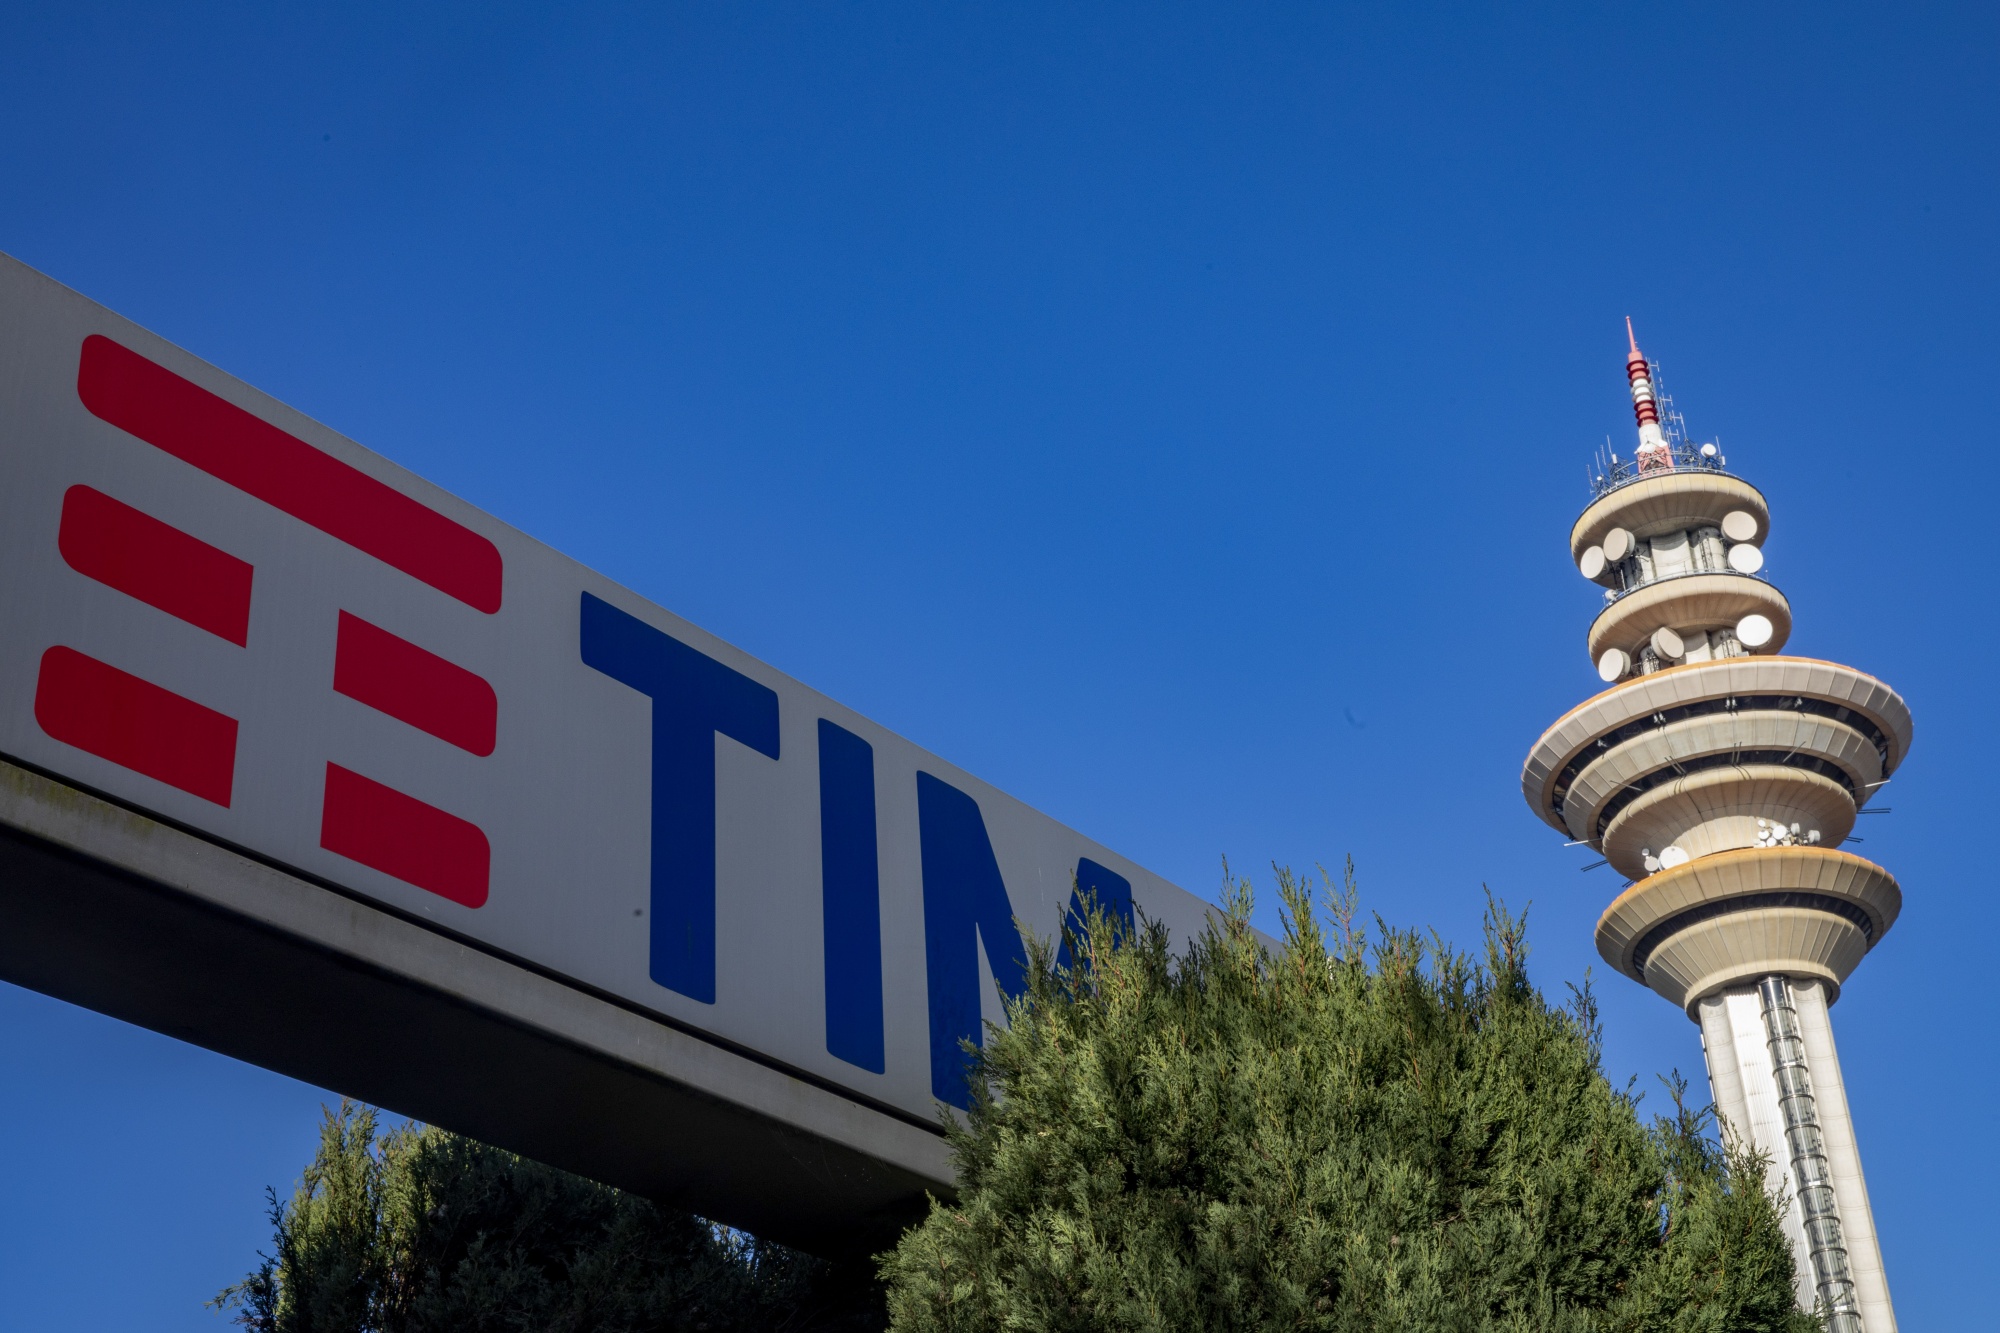 TIM debates grid bids as investor Vivendi challenges strategy